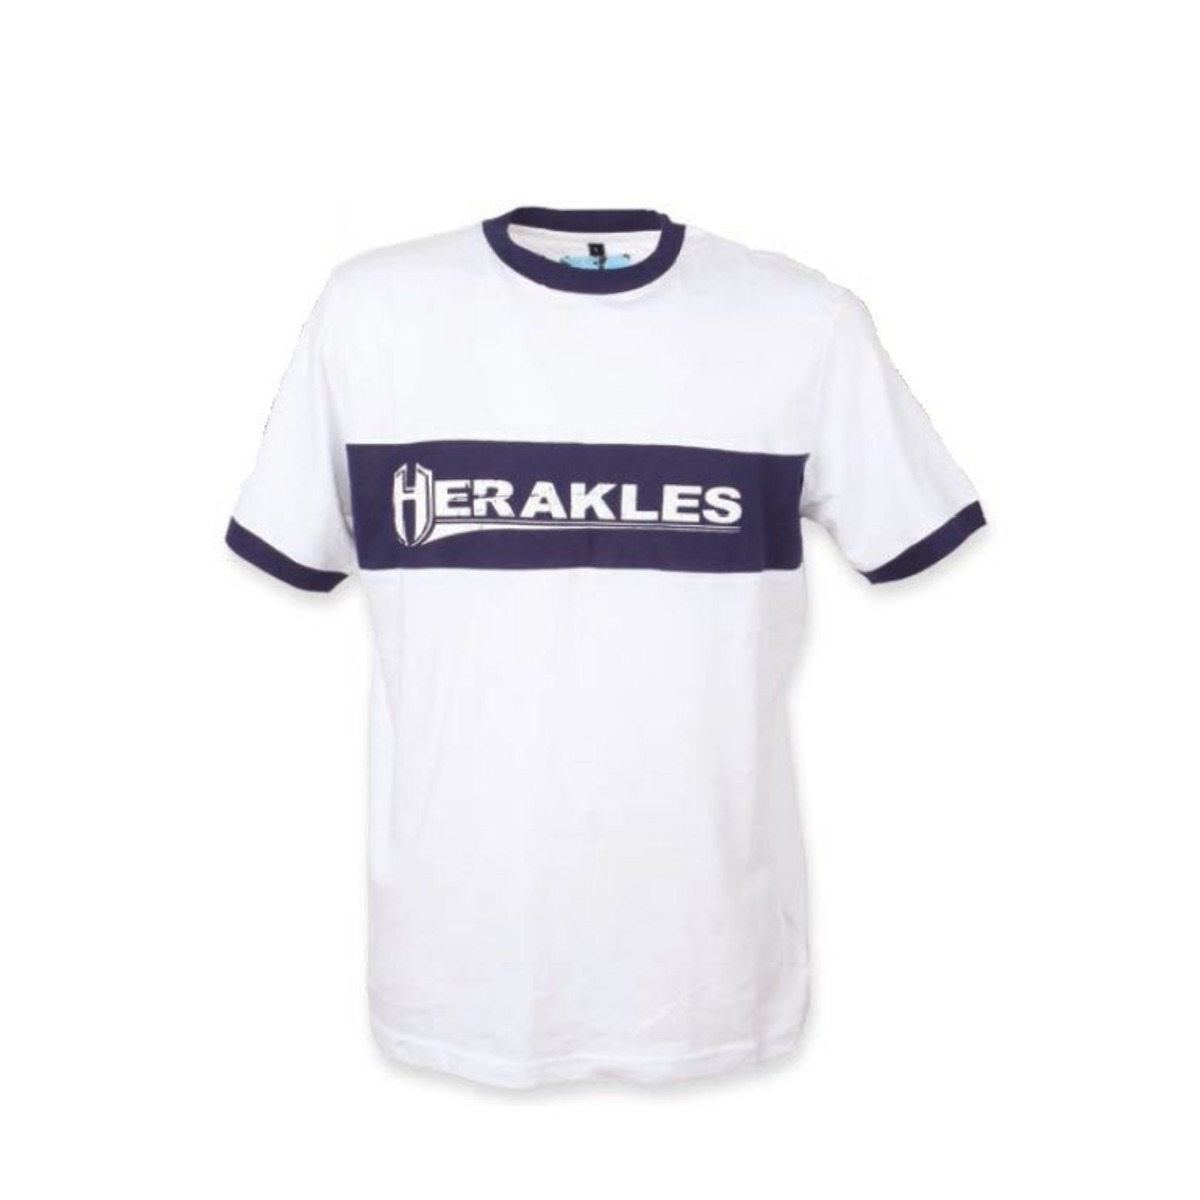 Herakles T-Shirt Weiß-Blau - XL